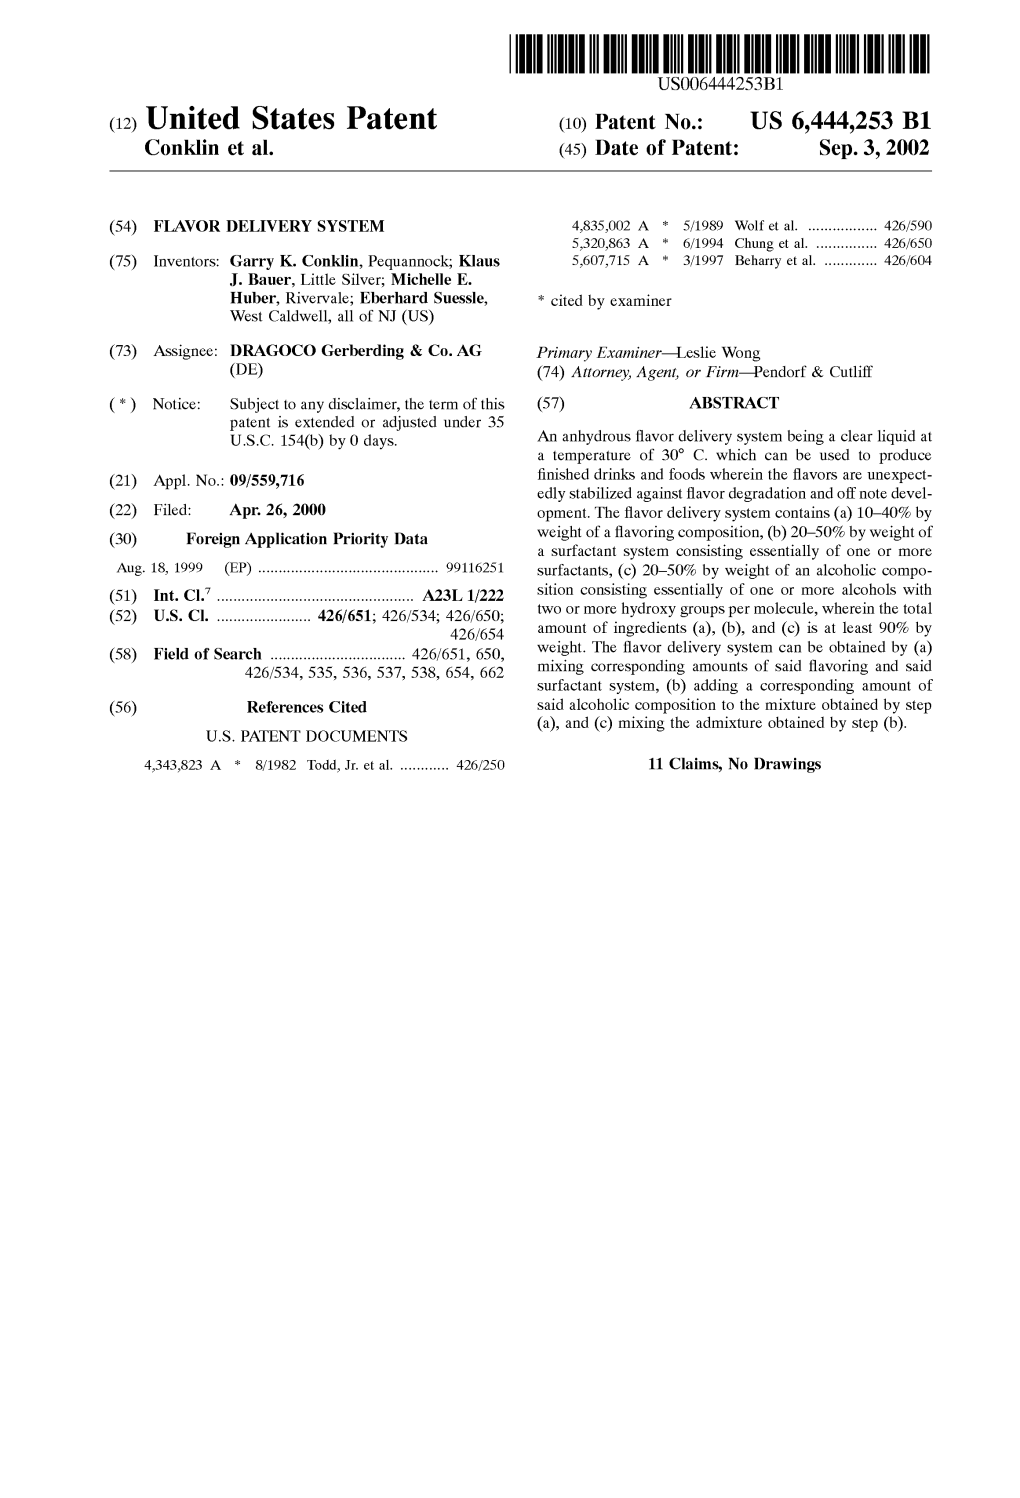 (12) United States Patent (10) Patent No.: US 6,444,253 B1 Conklin Et Al